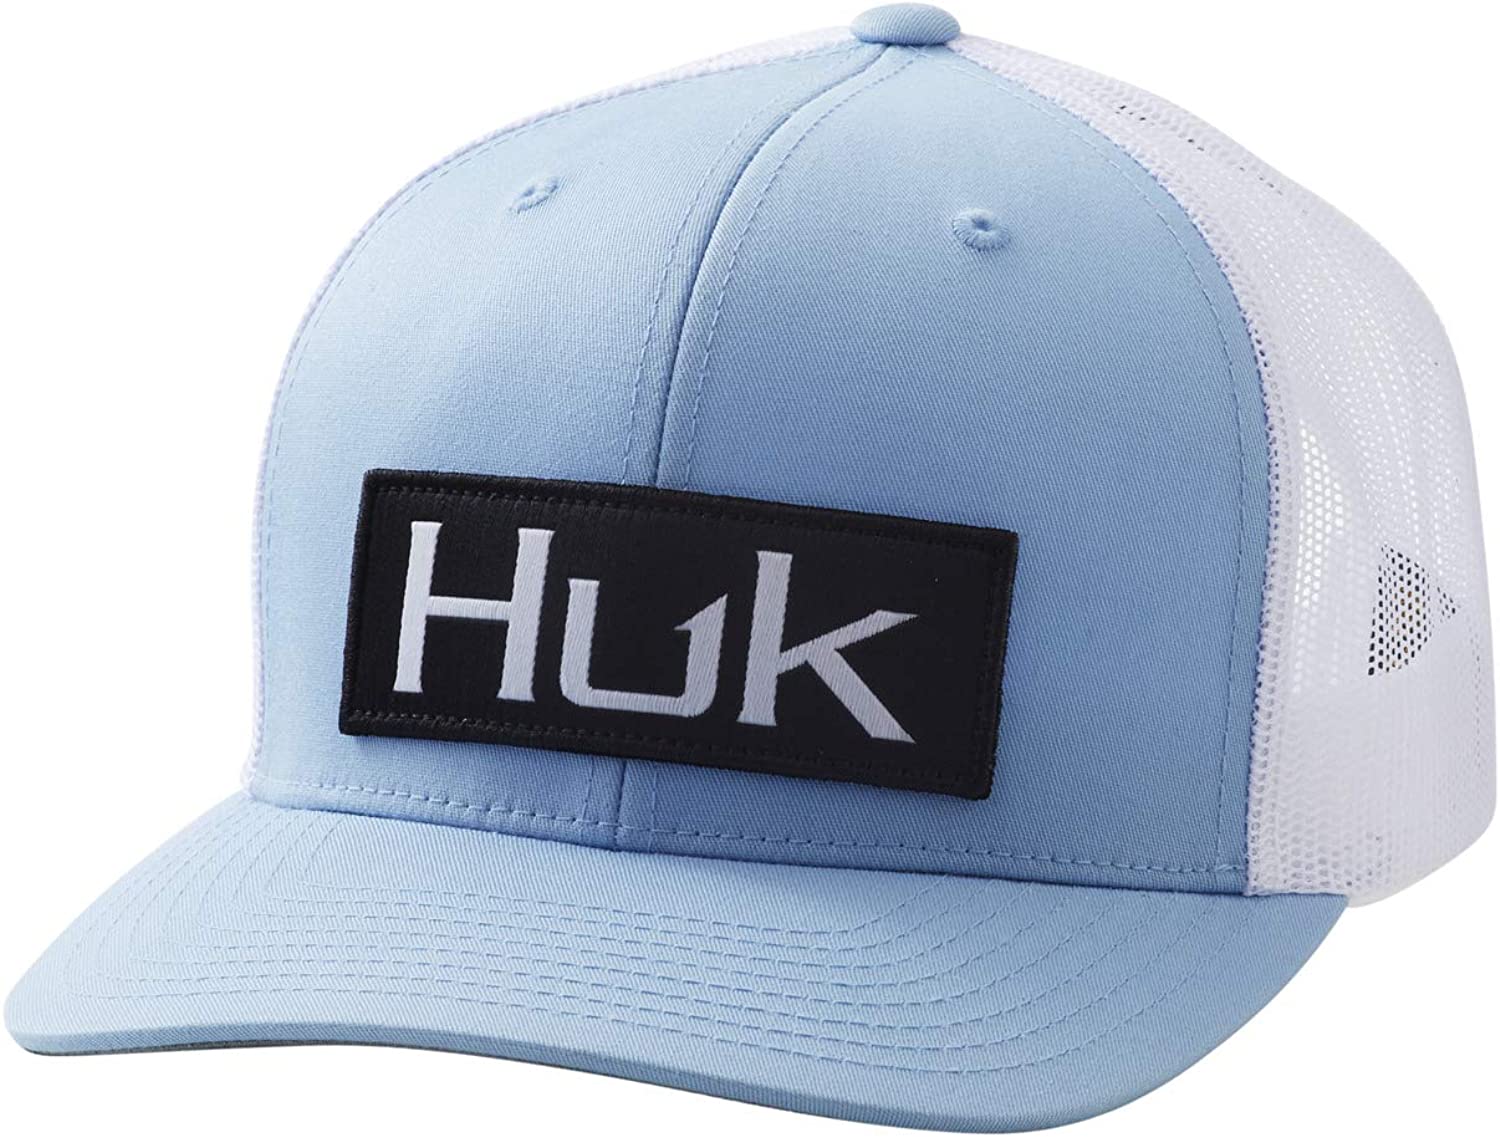 Huk'd Up Angler Hat